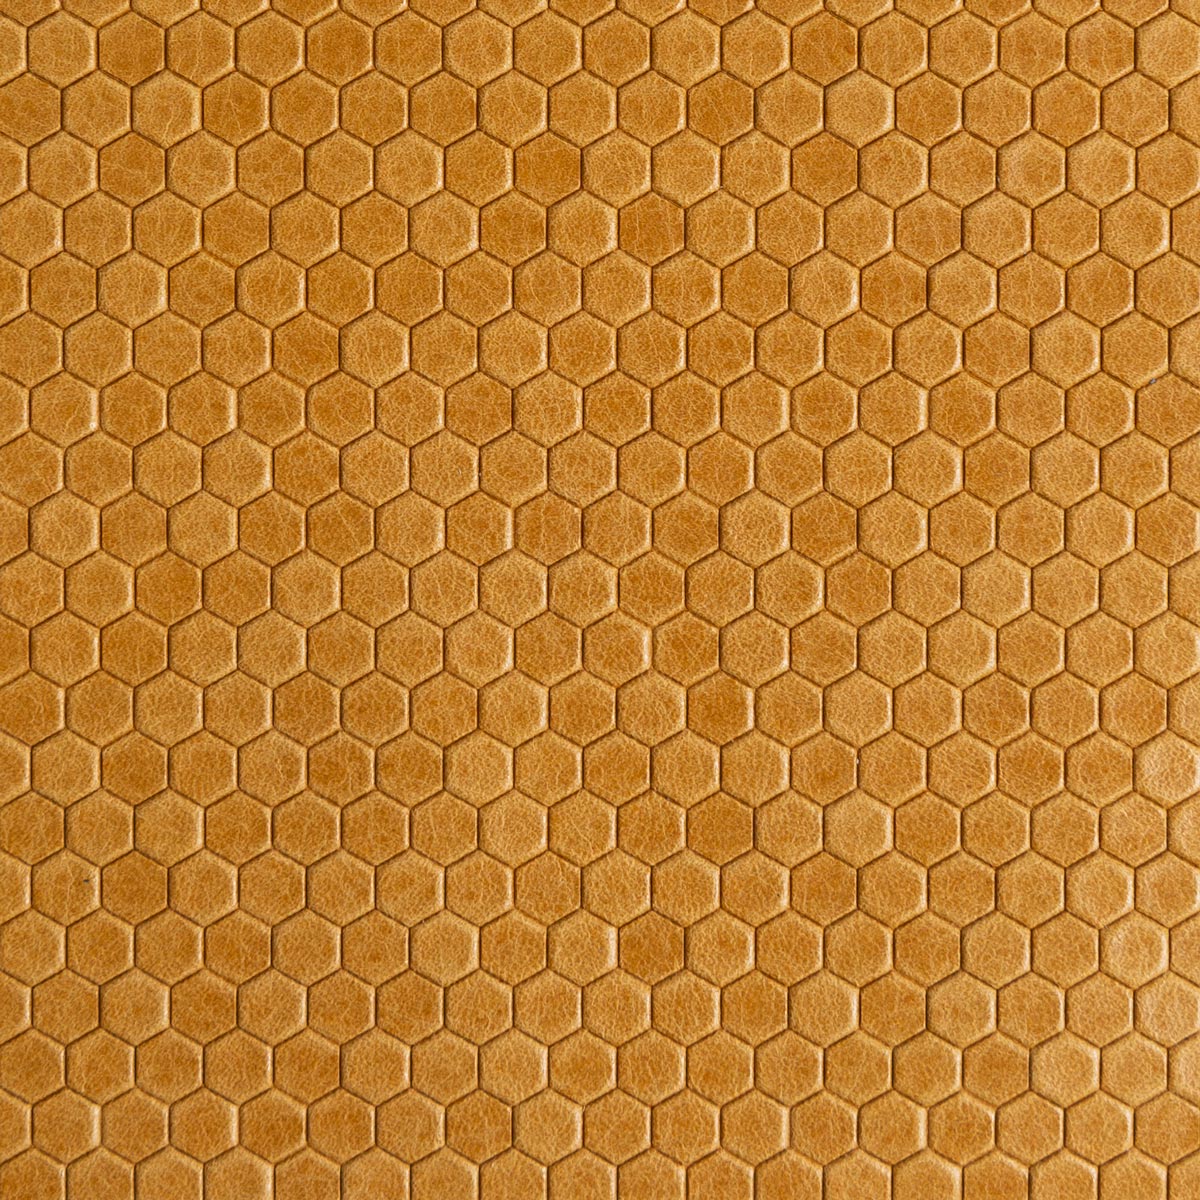 Honeycomb - Embossed Leather - Jamie Stern Design